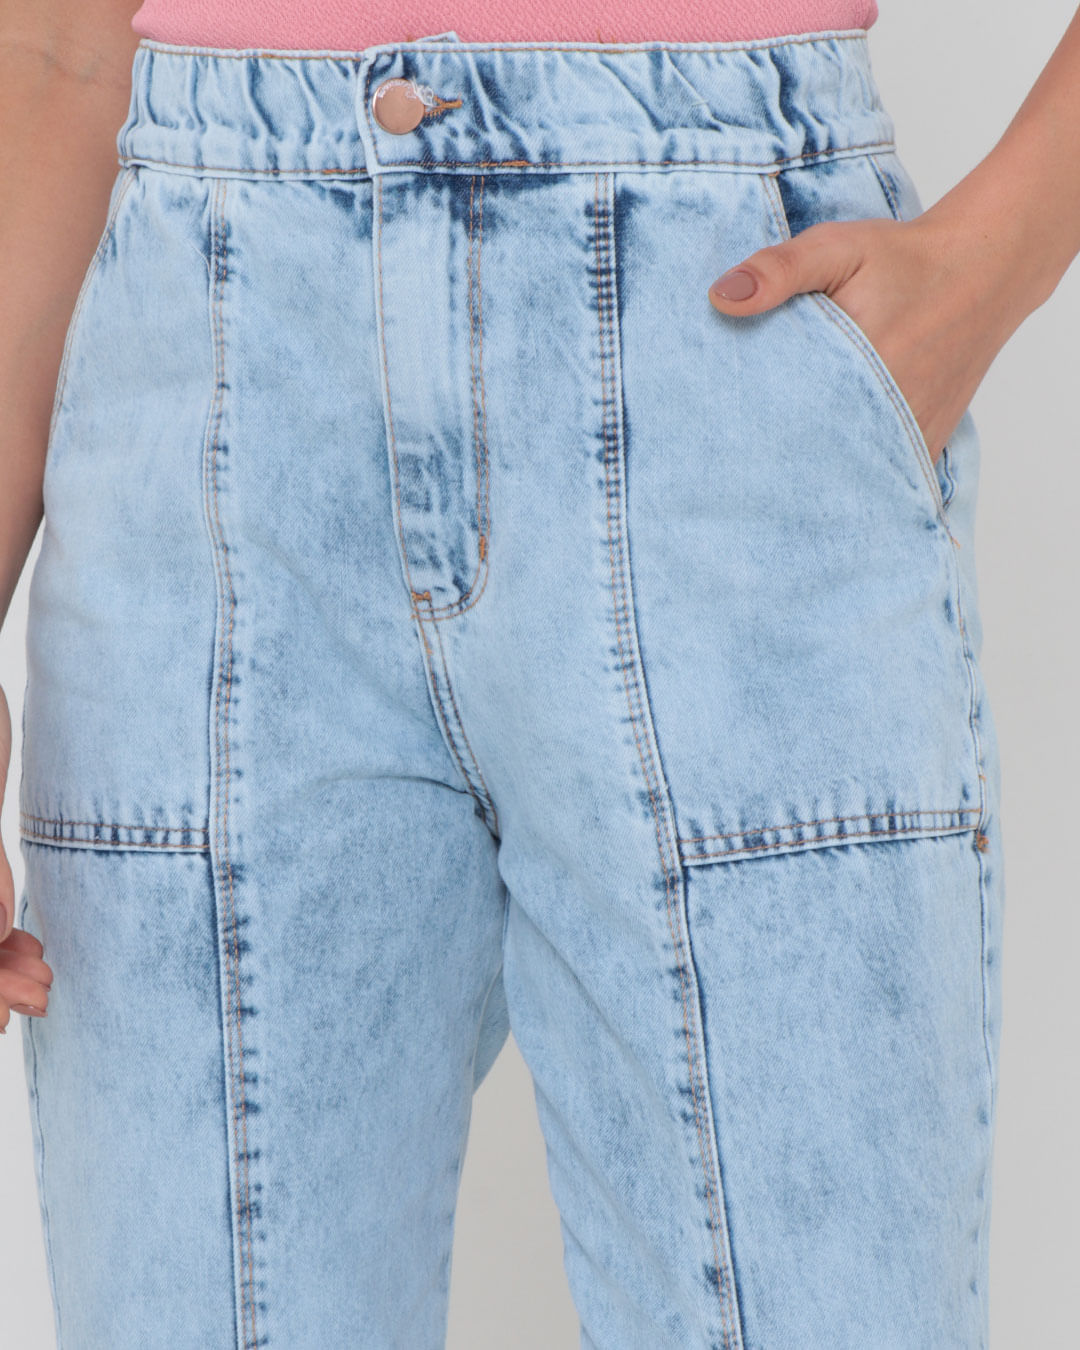 Calca-Jeans-Feminina-Azul-Claro